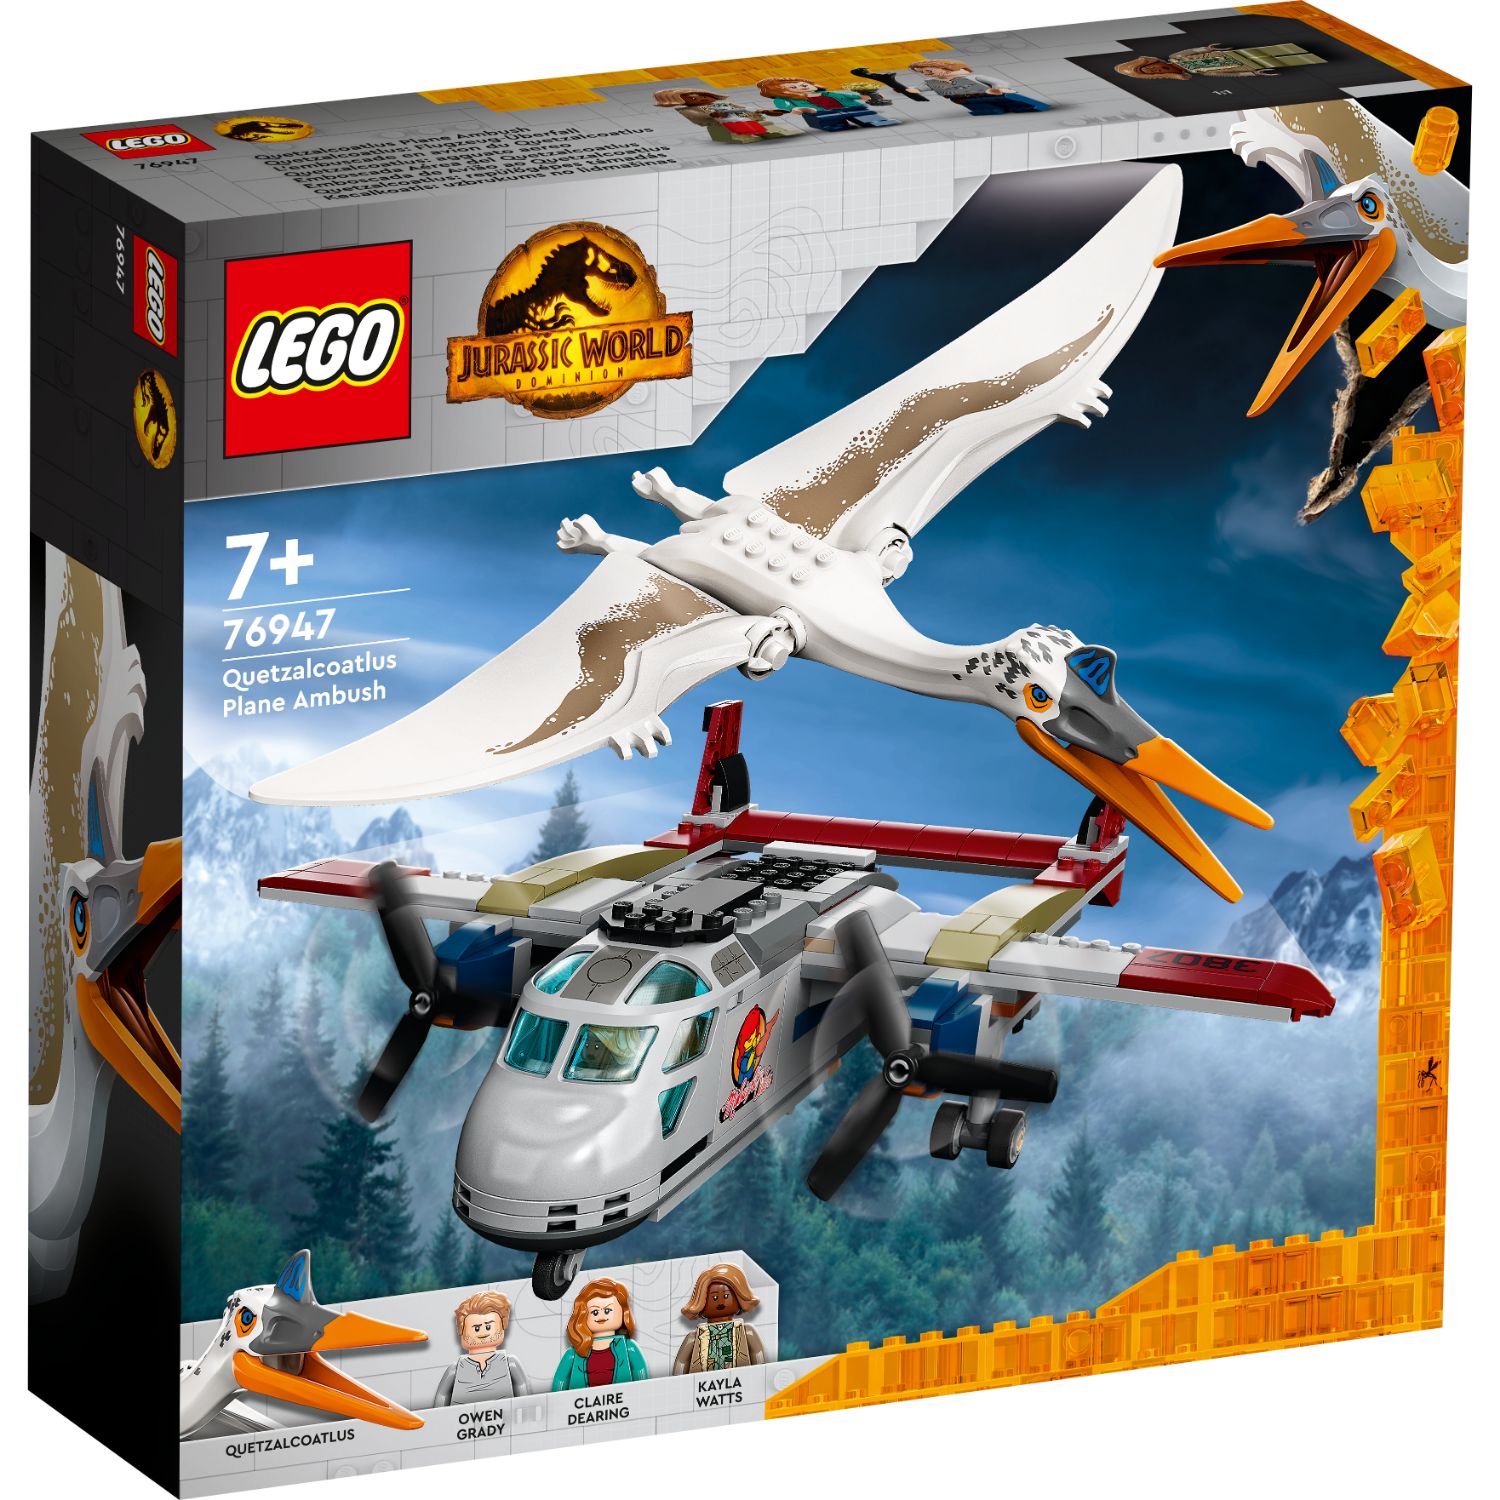 LEGO JURASSIC WORLD 76947 QUETZALCOATLUS VLIEGTUIG HINDERLAA